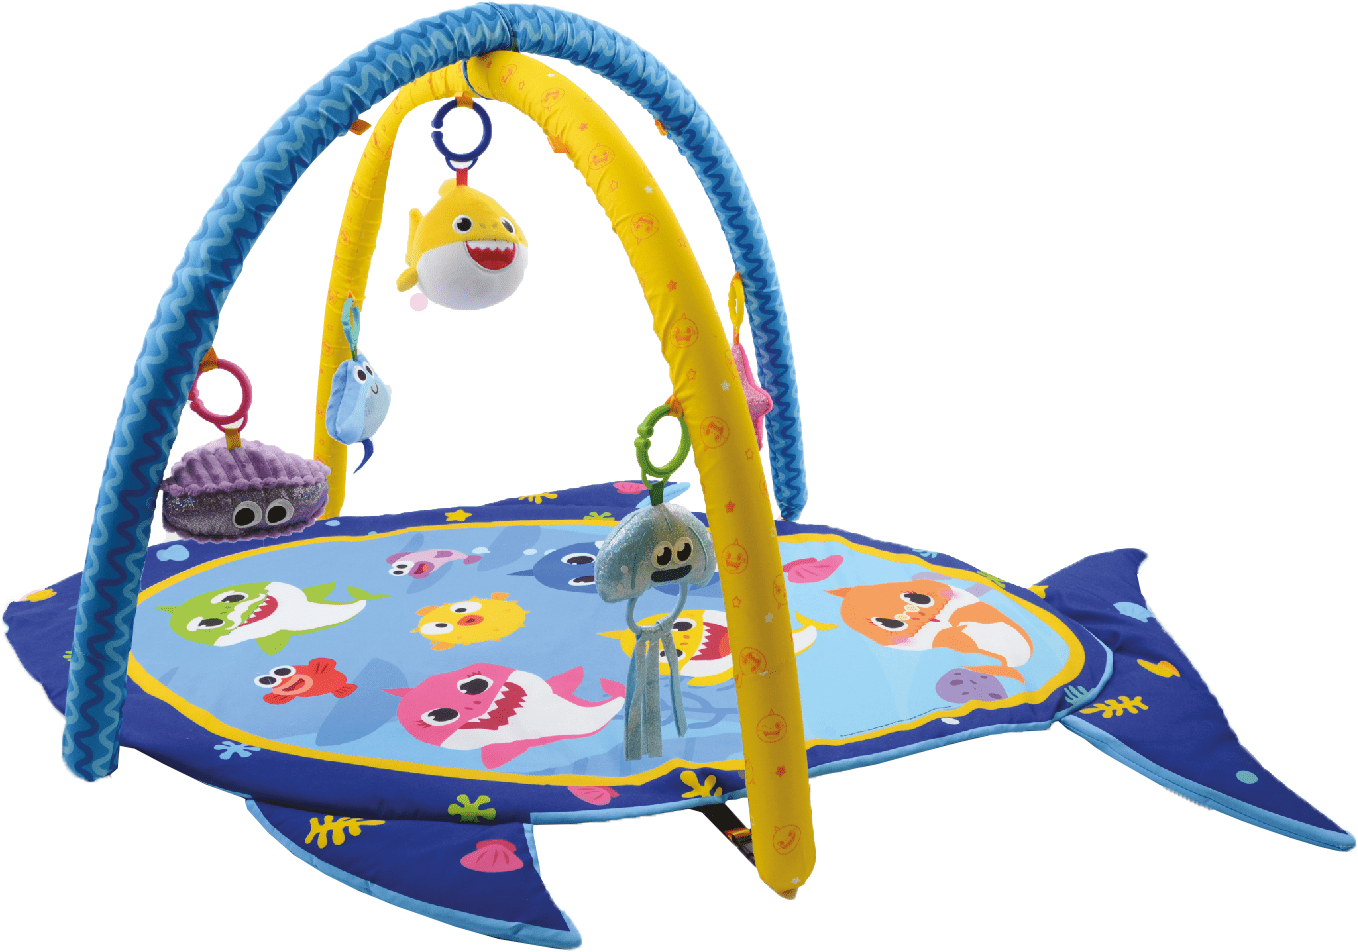 Baby Shark Toys, Playroom Furniture and Children's Tableware - Jemini